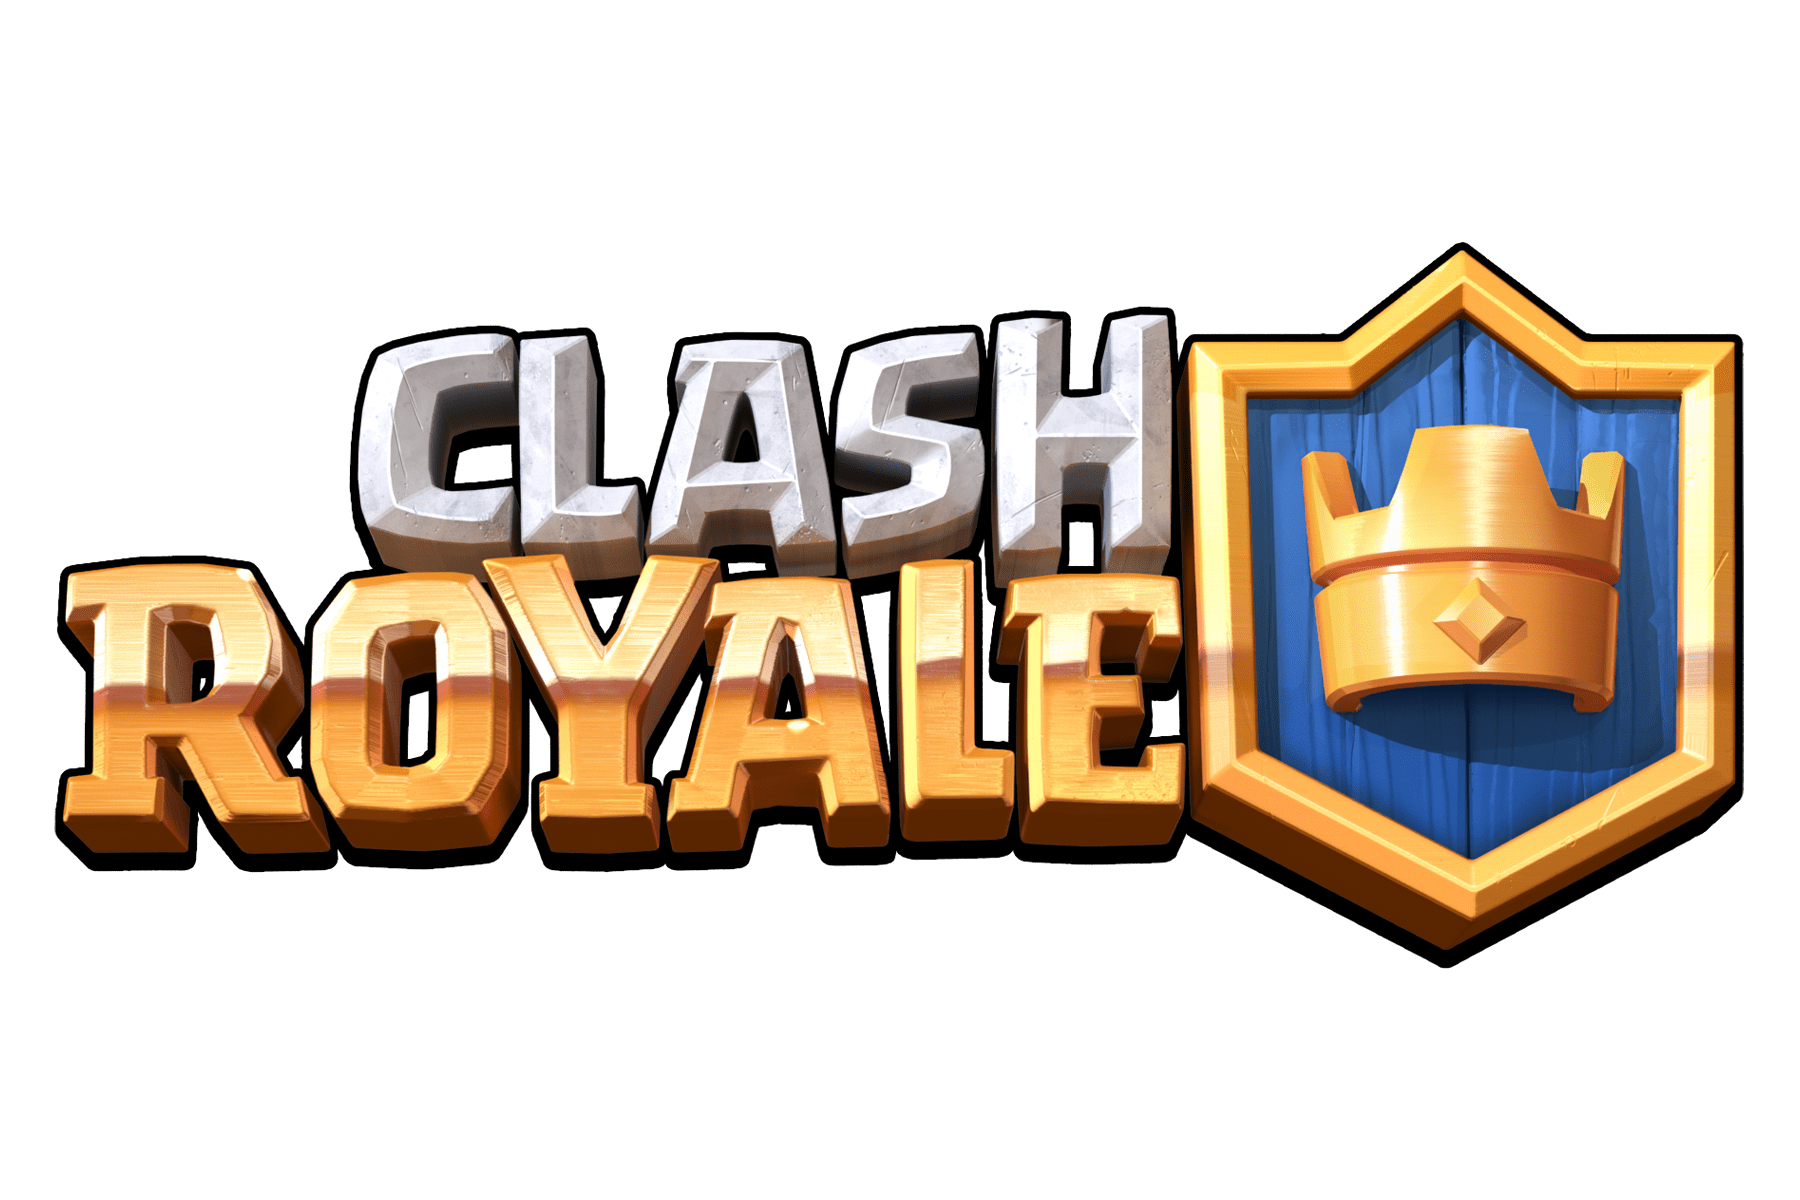 Clash royale Gems Free